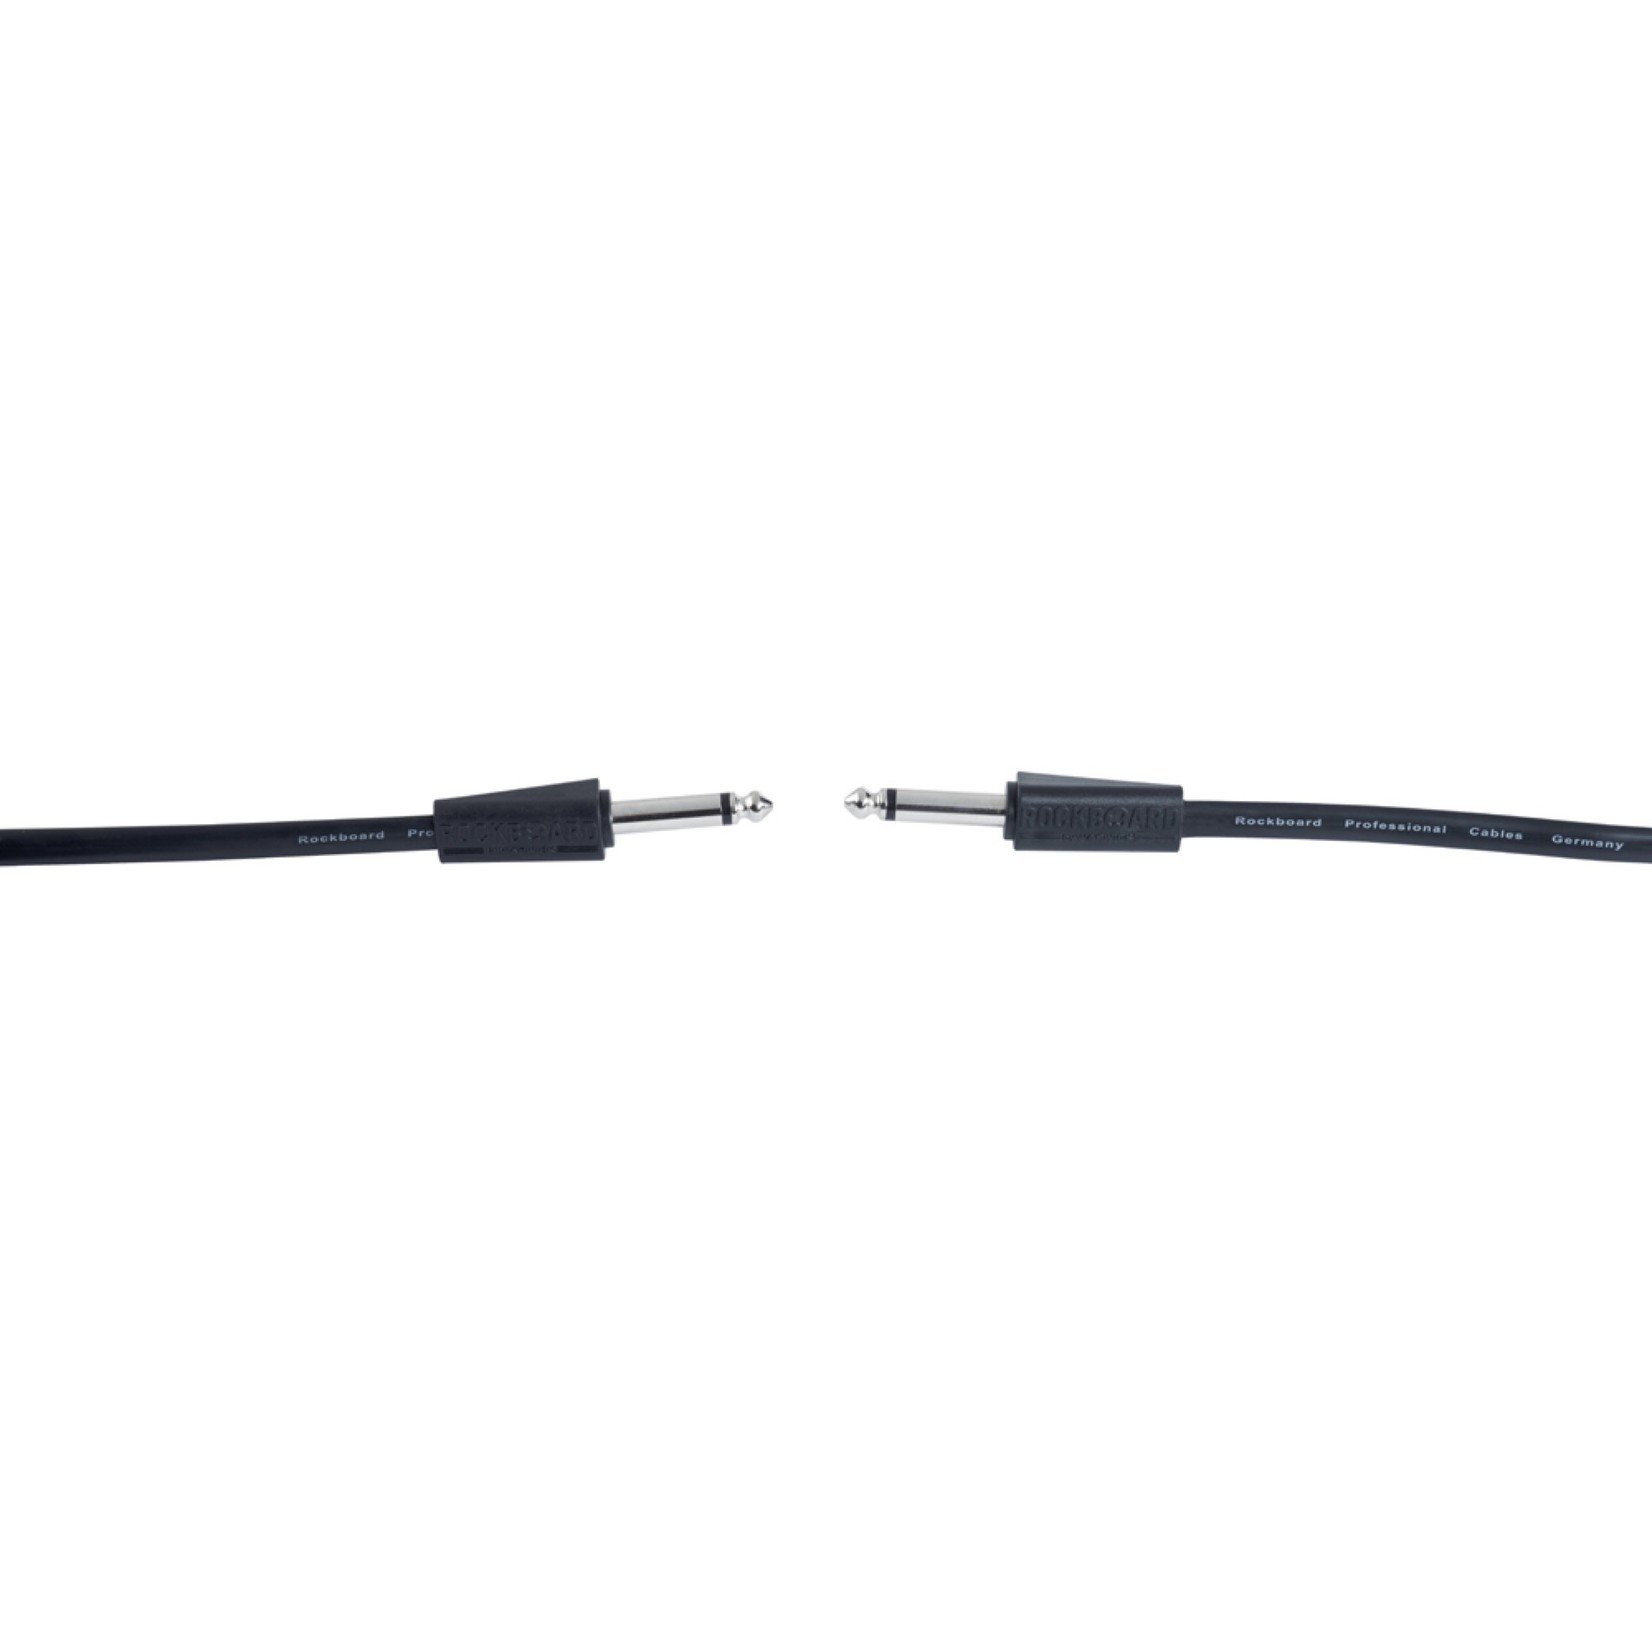 Rockboard Rockboard Flat Lead (Instrument) Cable - 600 cm / 236.22" (~20 ft) - 1/4" Straight to Straight